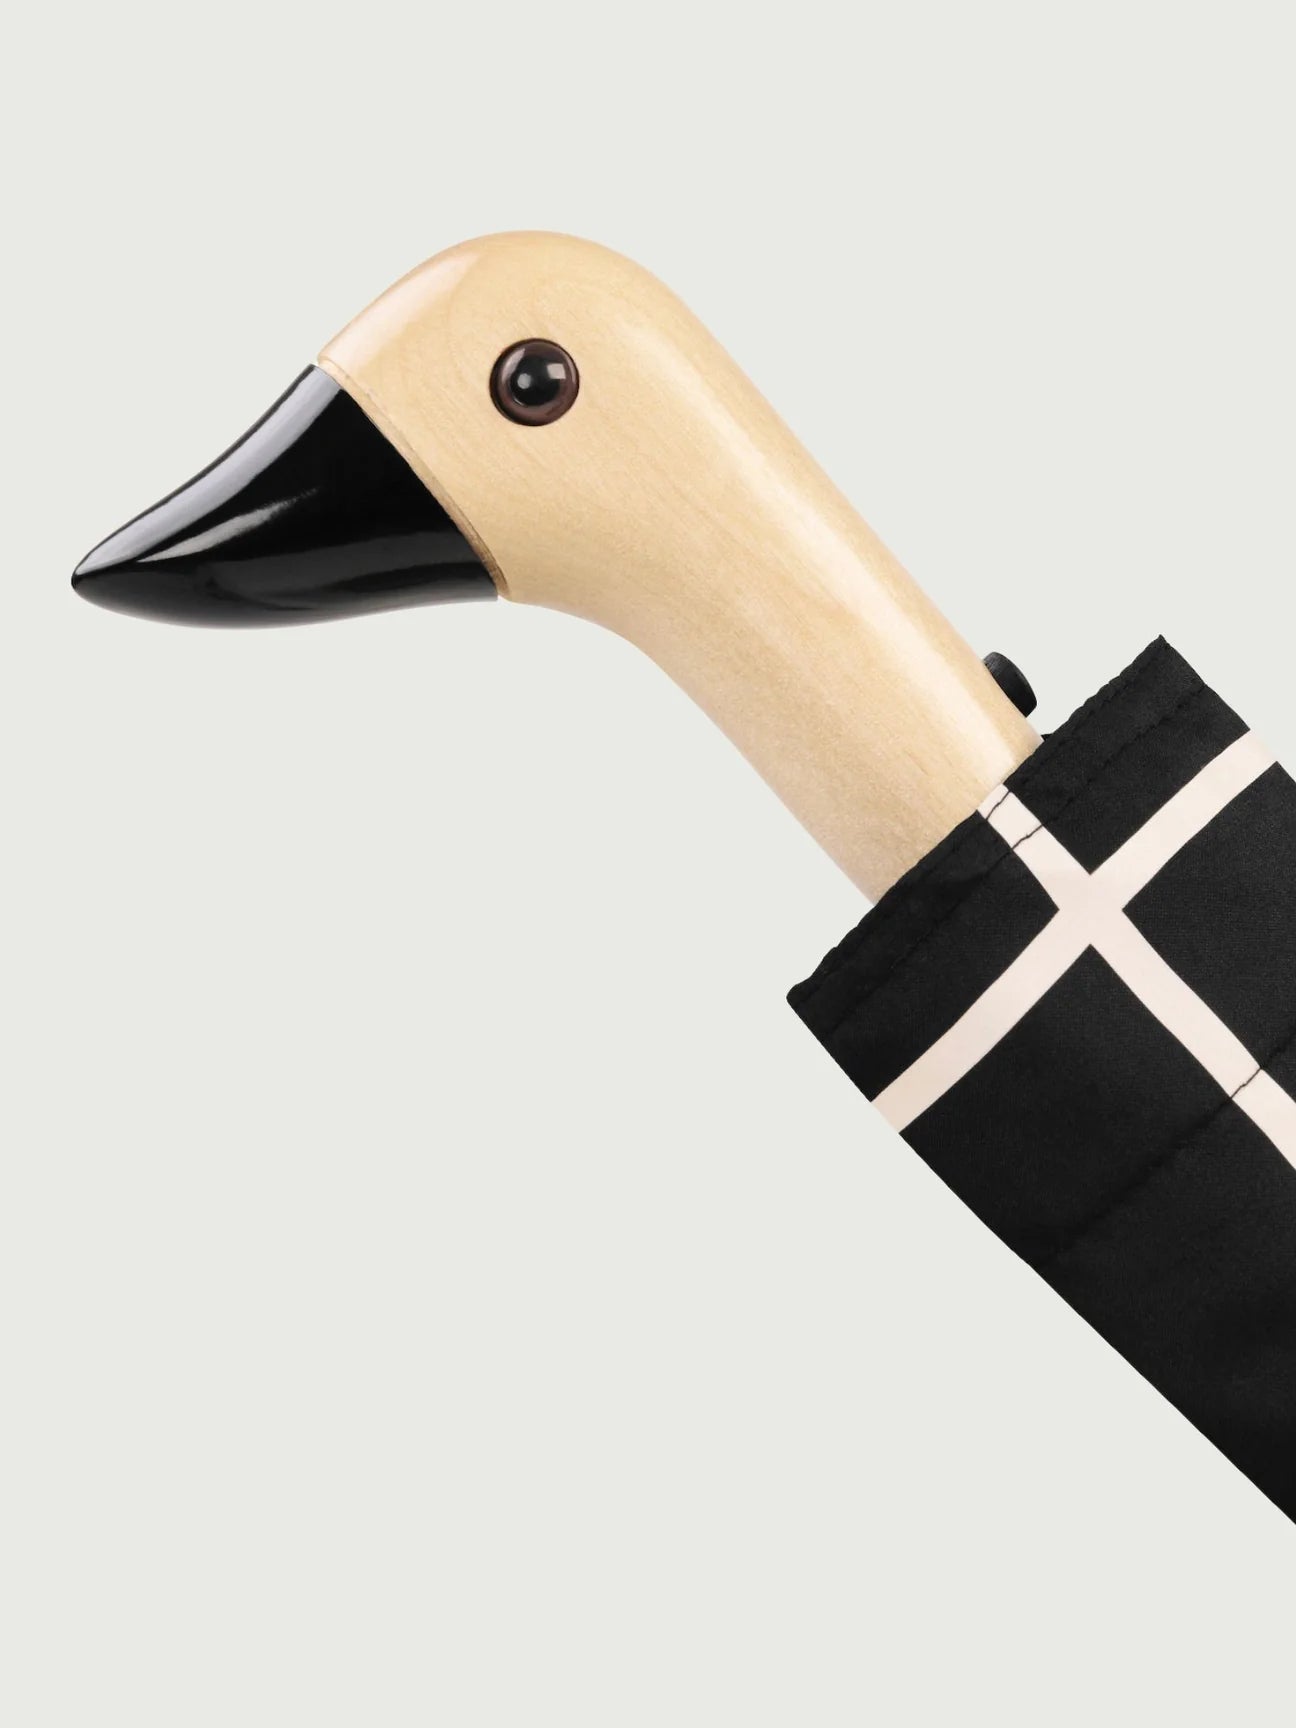 Original Duckhead Auto-Open Eco-Friendly Umbrella – Black Grid